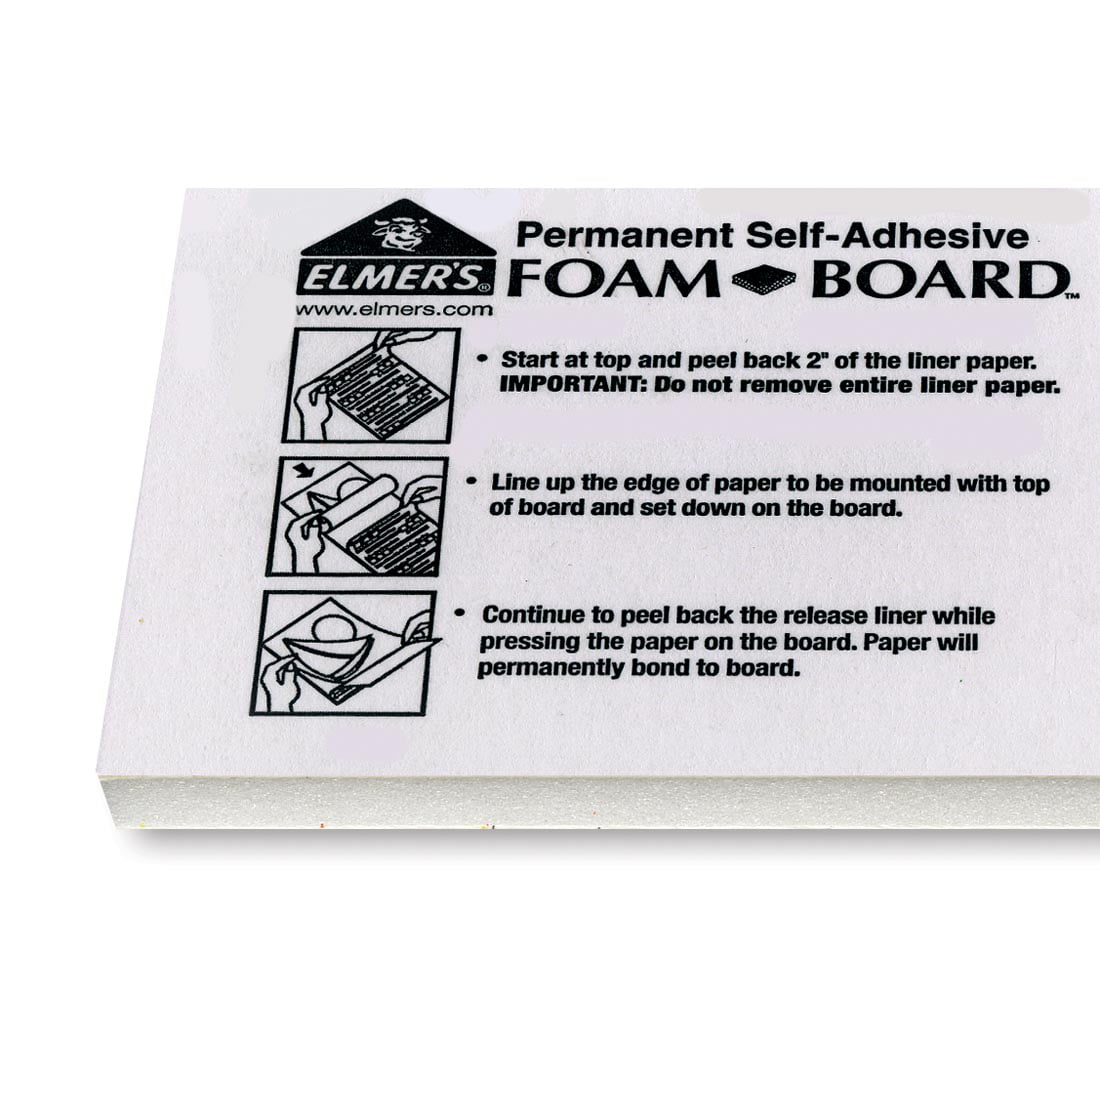 Buy Black 3/16 Foam Core Permanent Adhesive 36 x 48 Mounting